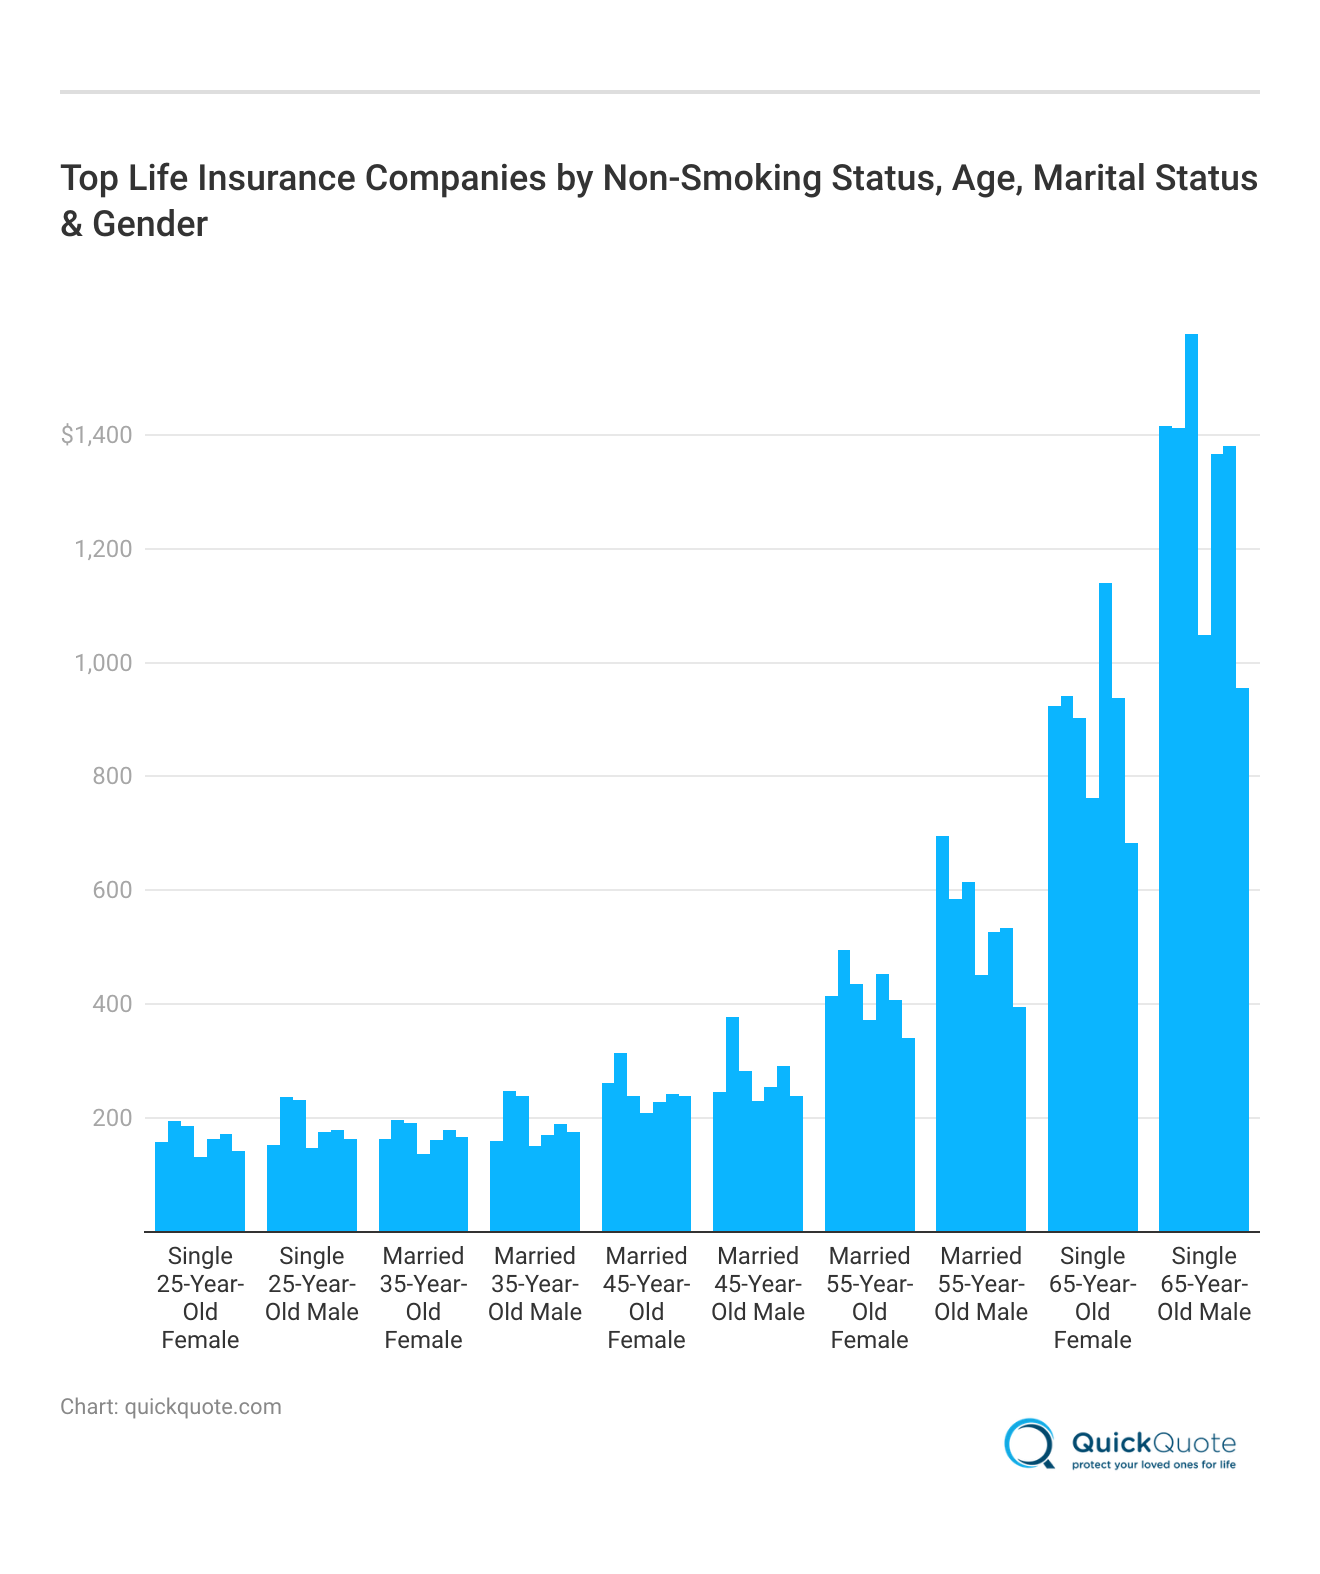 Top Life Insurance Companies by Non-Smoking Status, Age, Marital Status & Gender